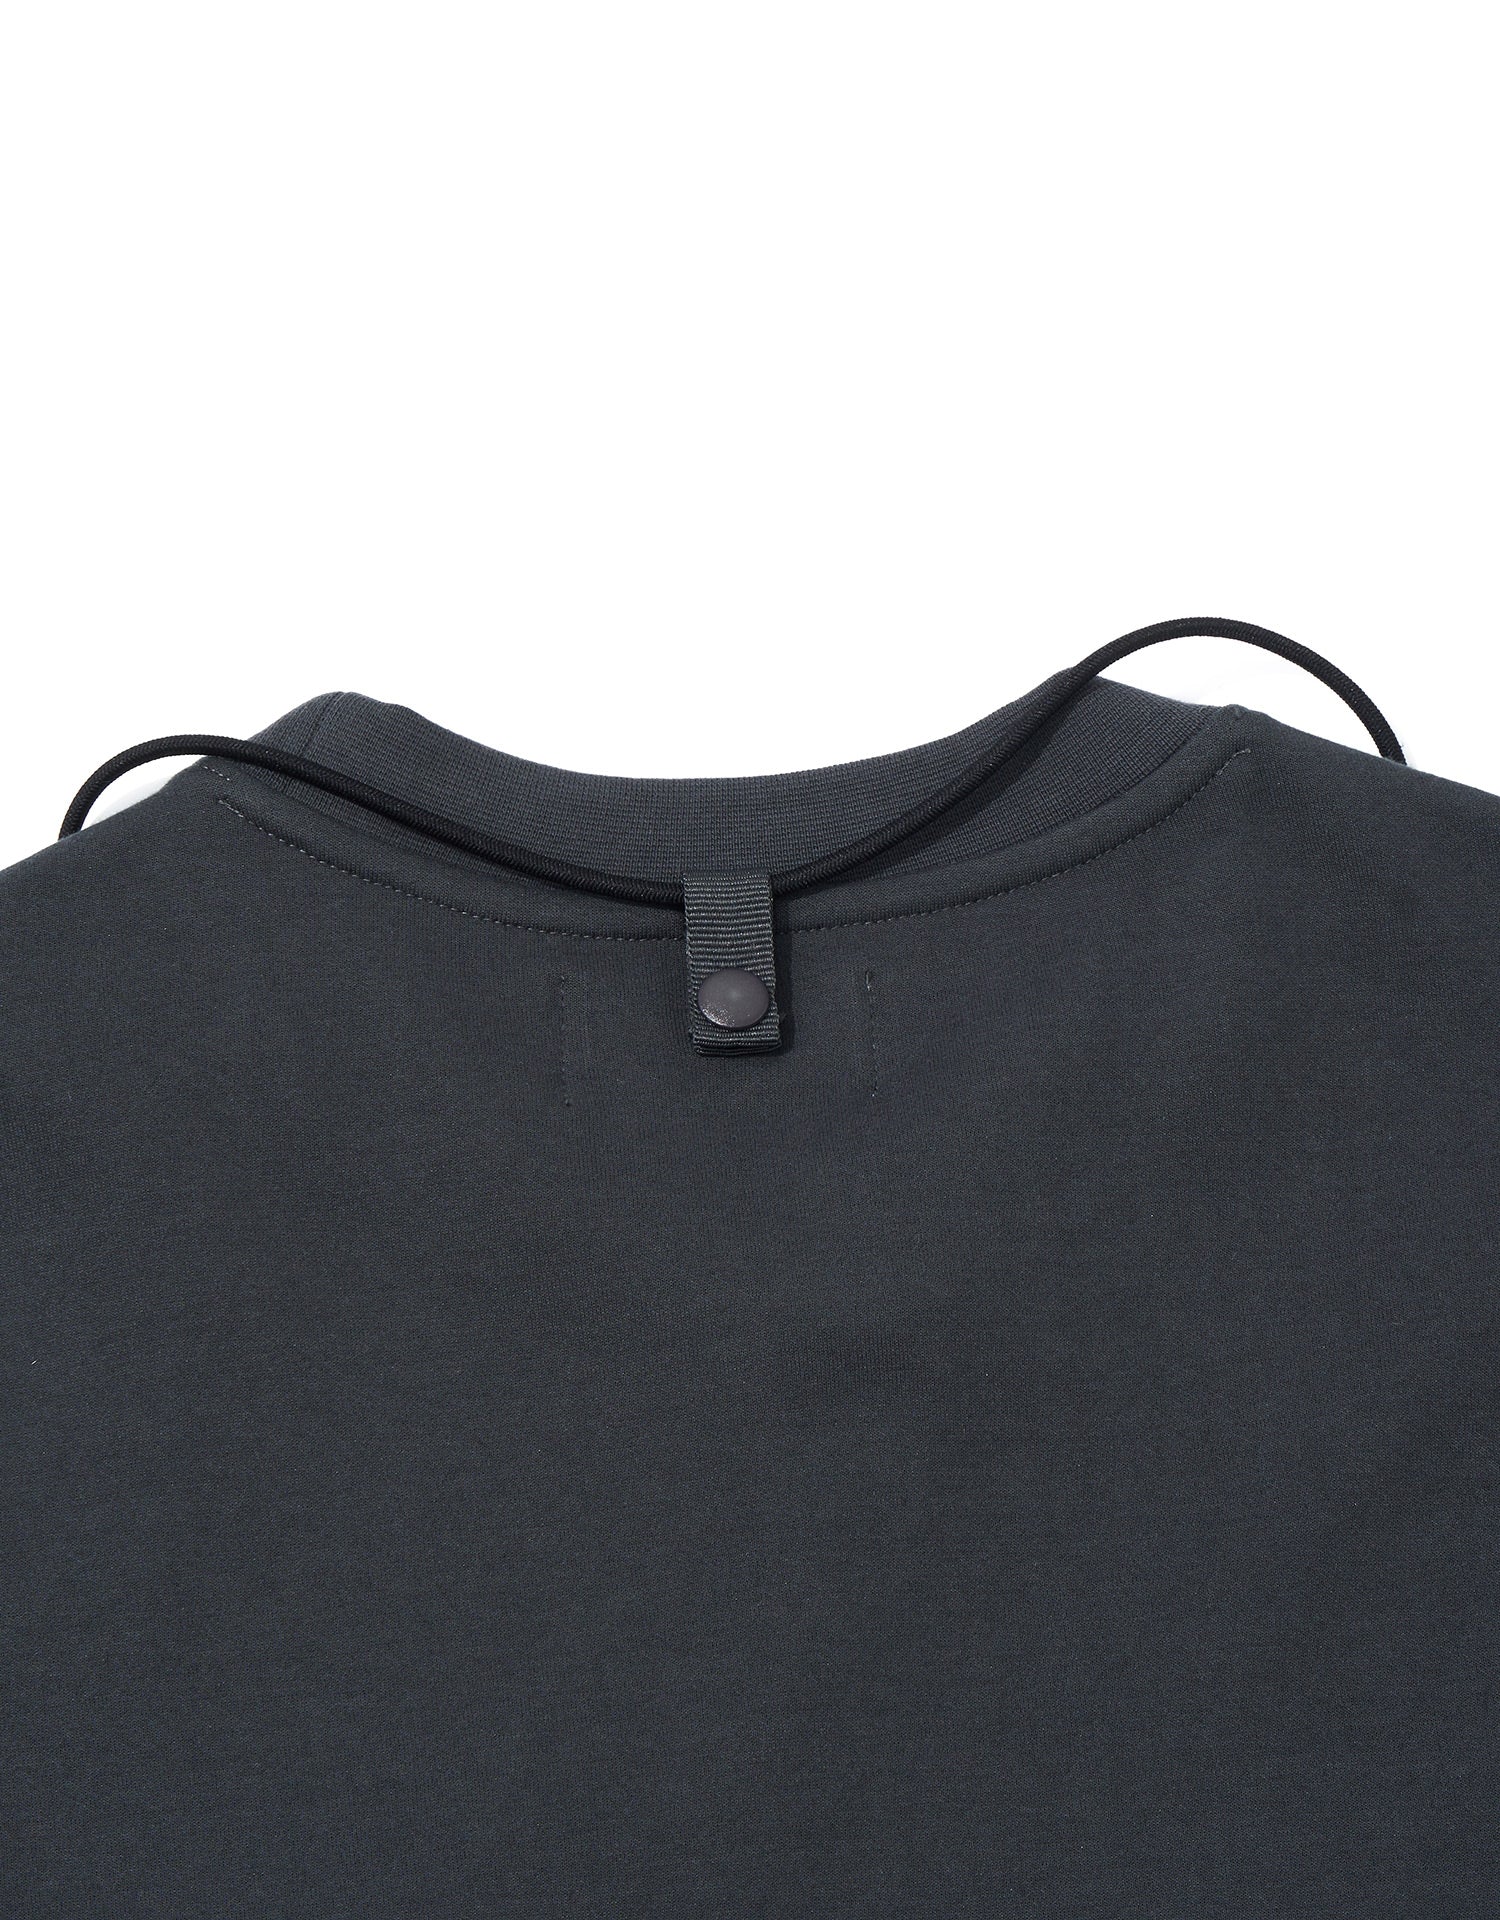 TopBasics Two Pockets Detachable Rope T-Shirt